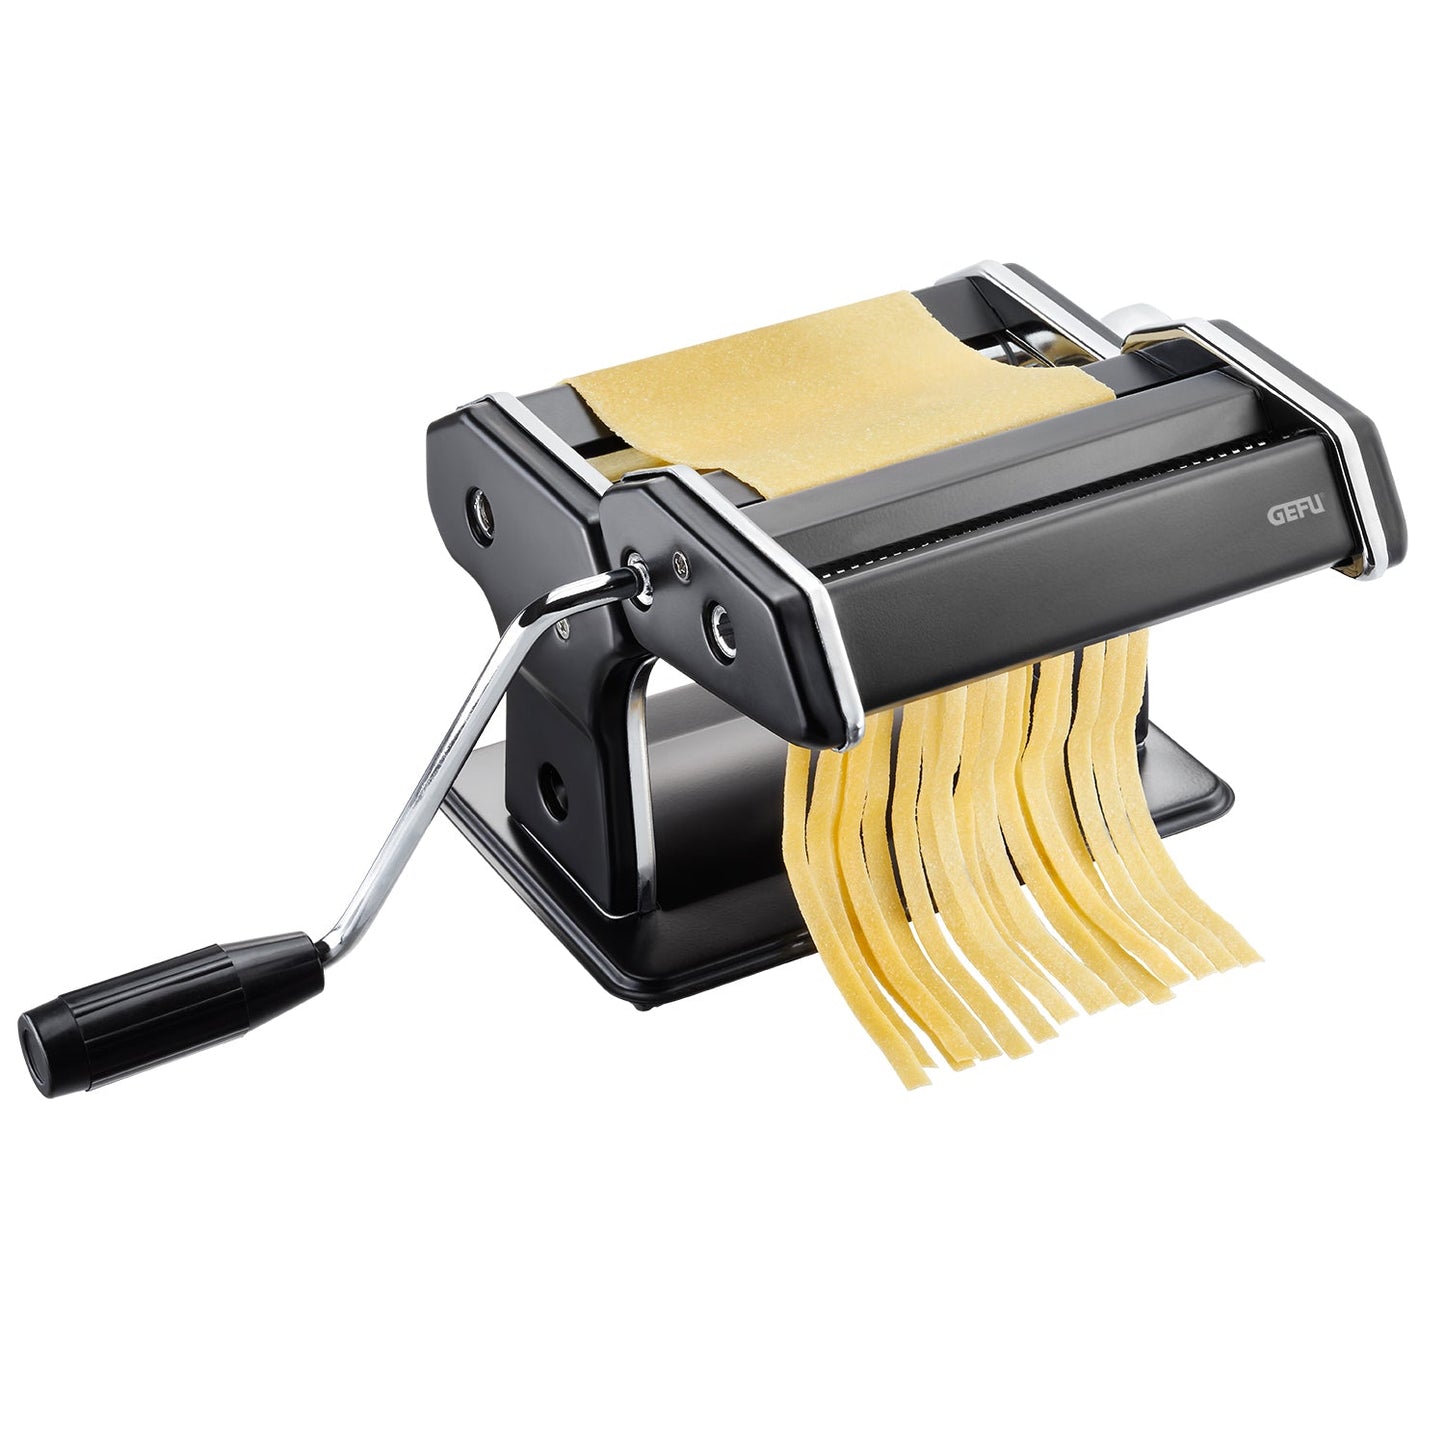 Pasta machine Perfetta, black